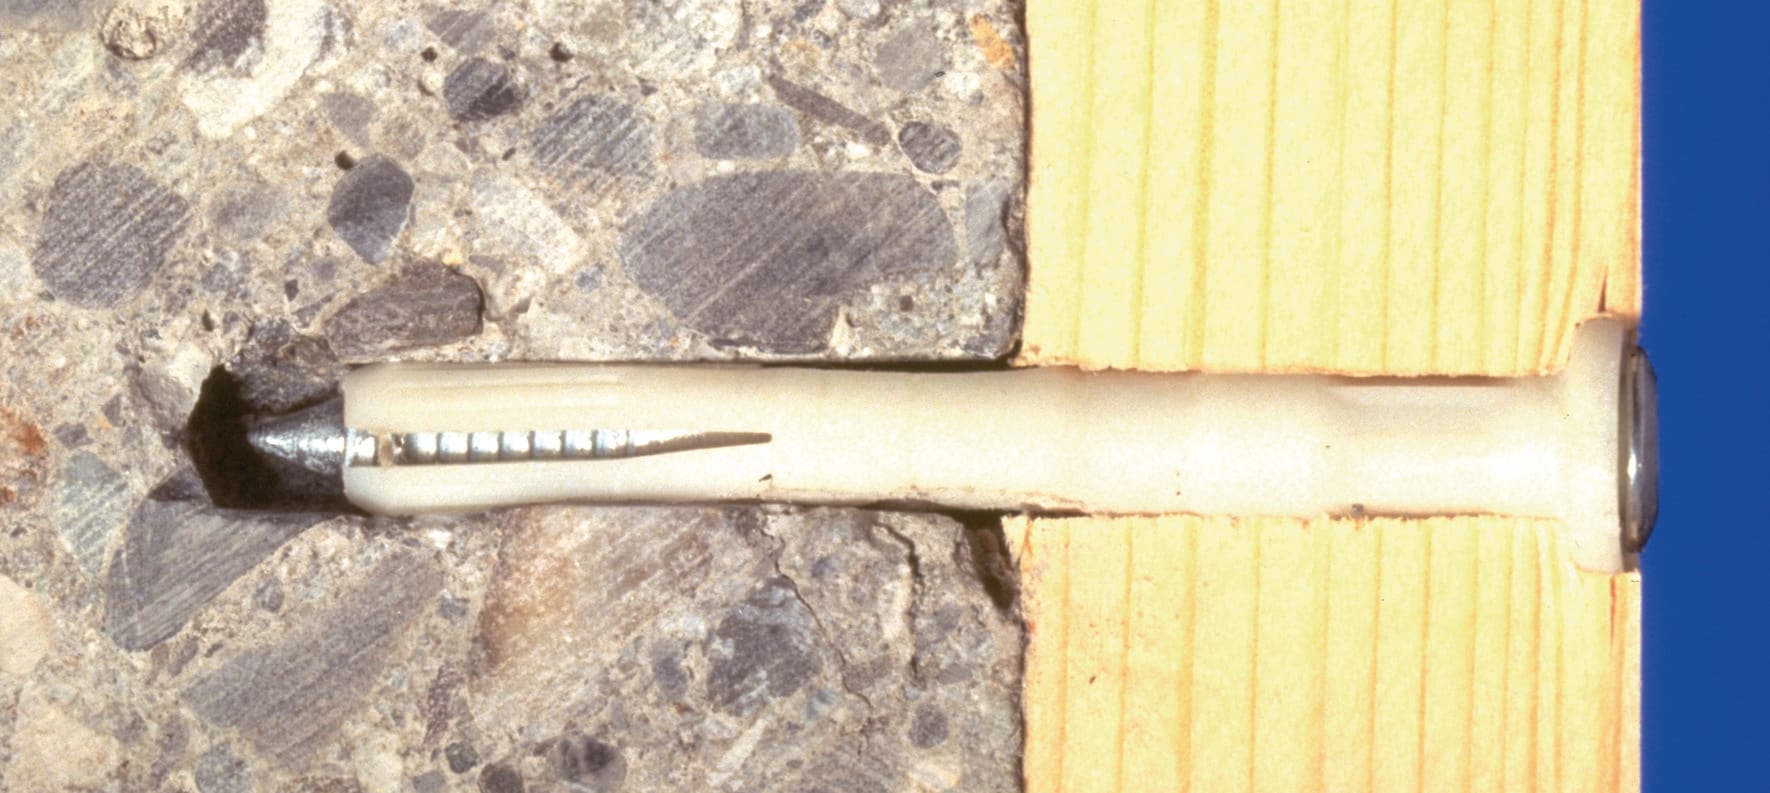 100 Hilti Hammer Fixings HPS-1 6/25X50 Plastic Universal Plugs Long with Screw